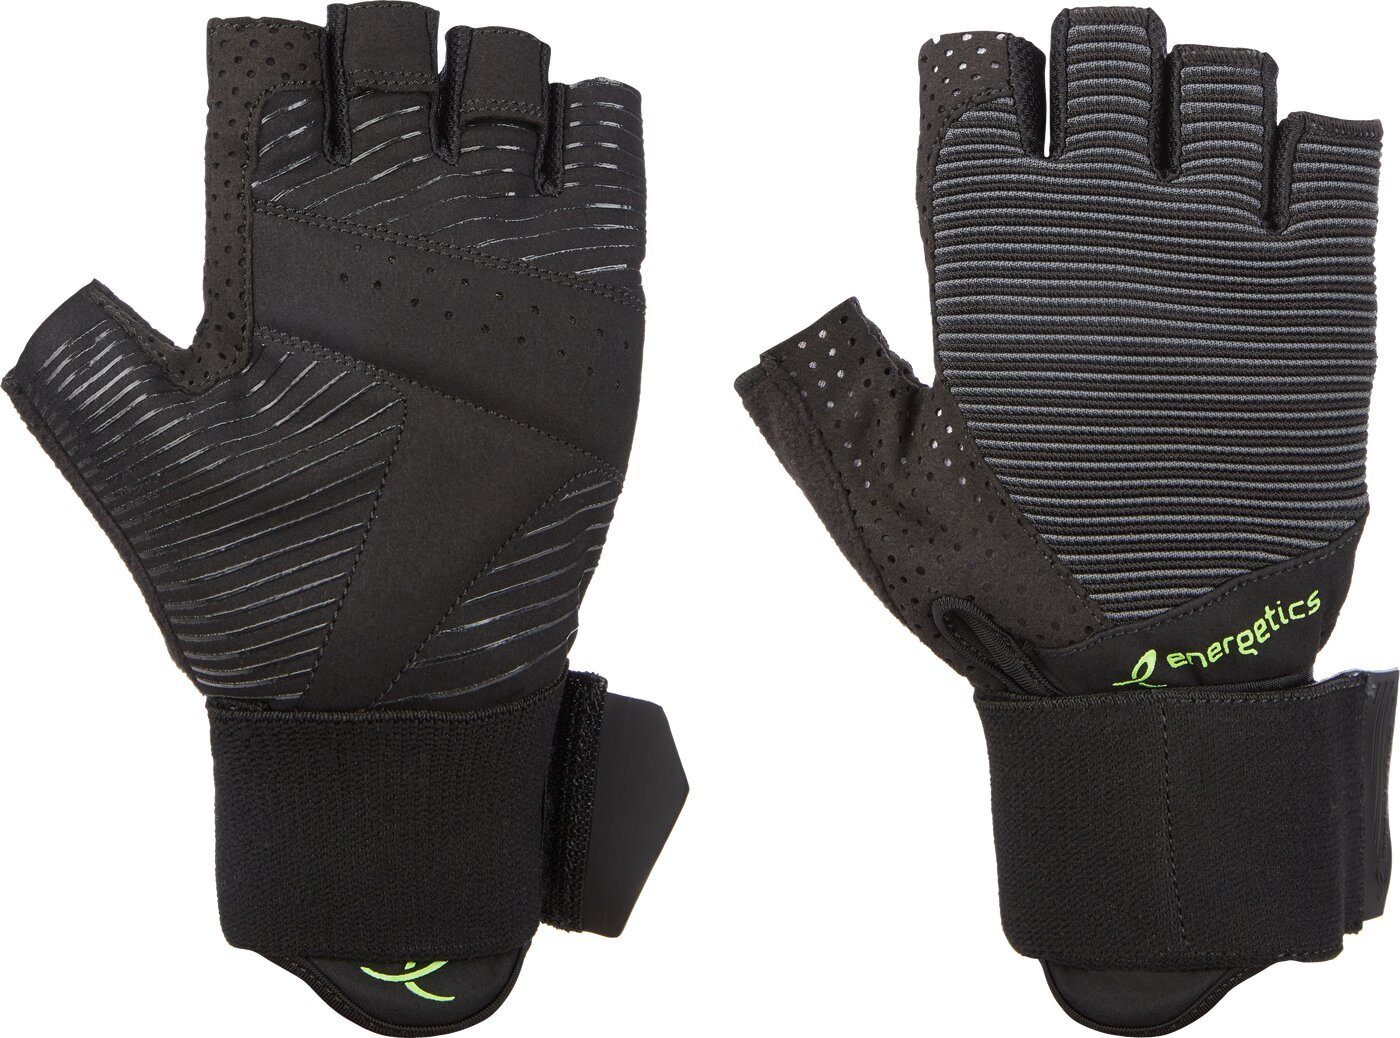 Energetics Gewichtshandschuhe Handschuh MFG550 BLACK/YELLOW | Trainingshandschuhe